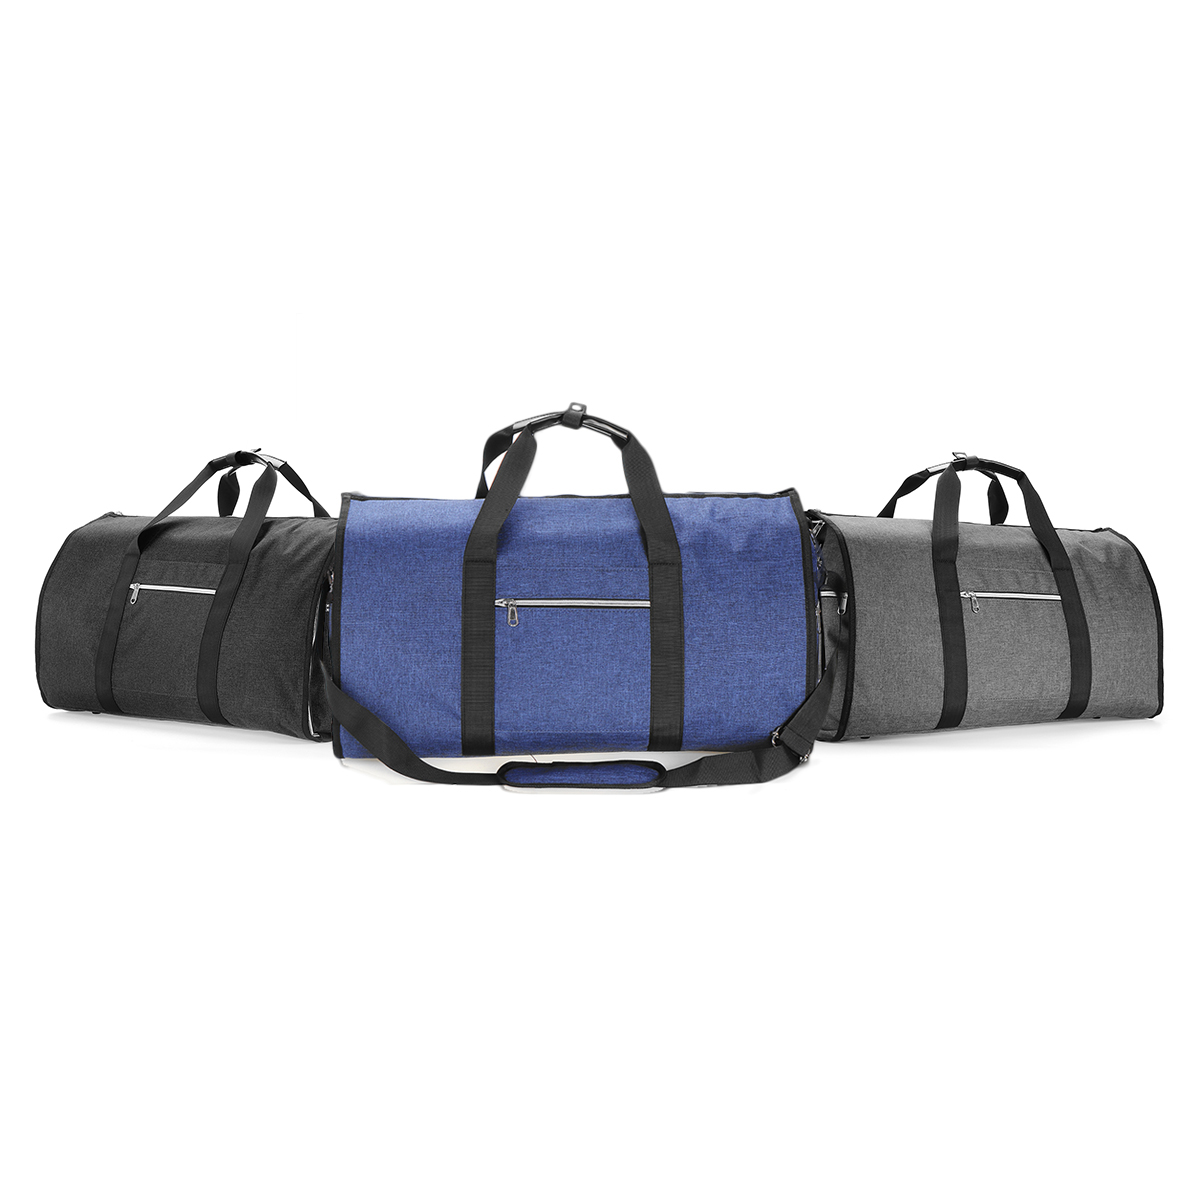 47L-Outdoor-Portable-Travel-Luggage-Bag-Suit-Dress-Garment-Storage-Handbag-Sports-Gym-Bag-1553950-3